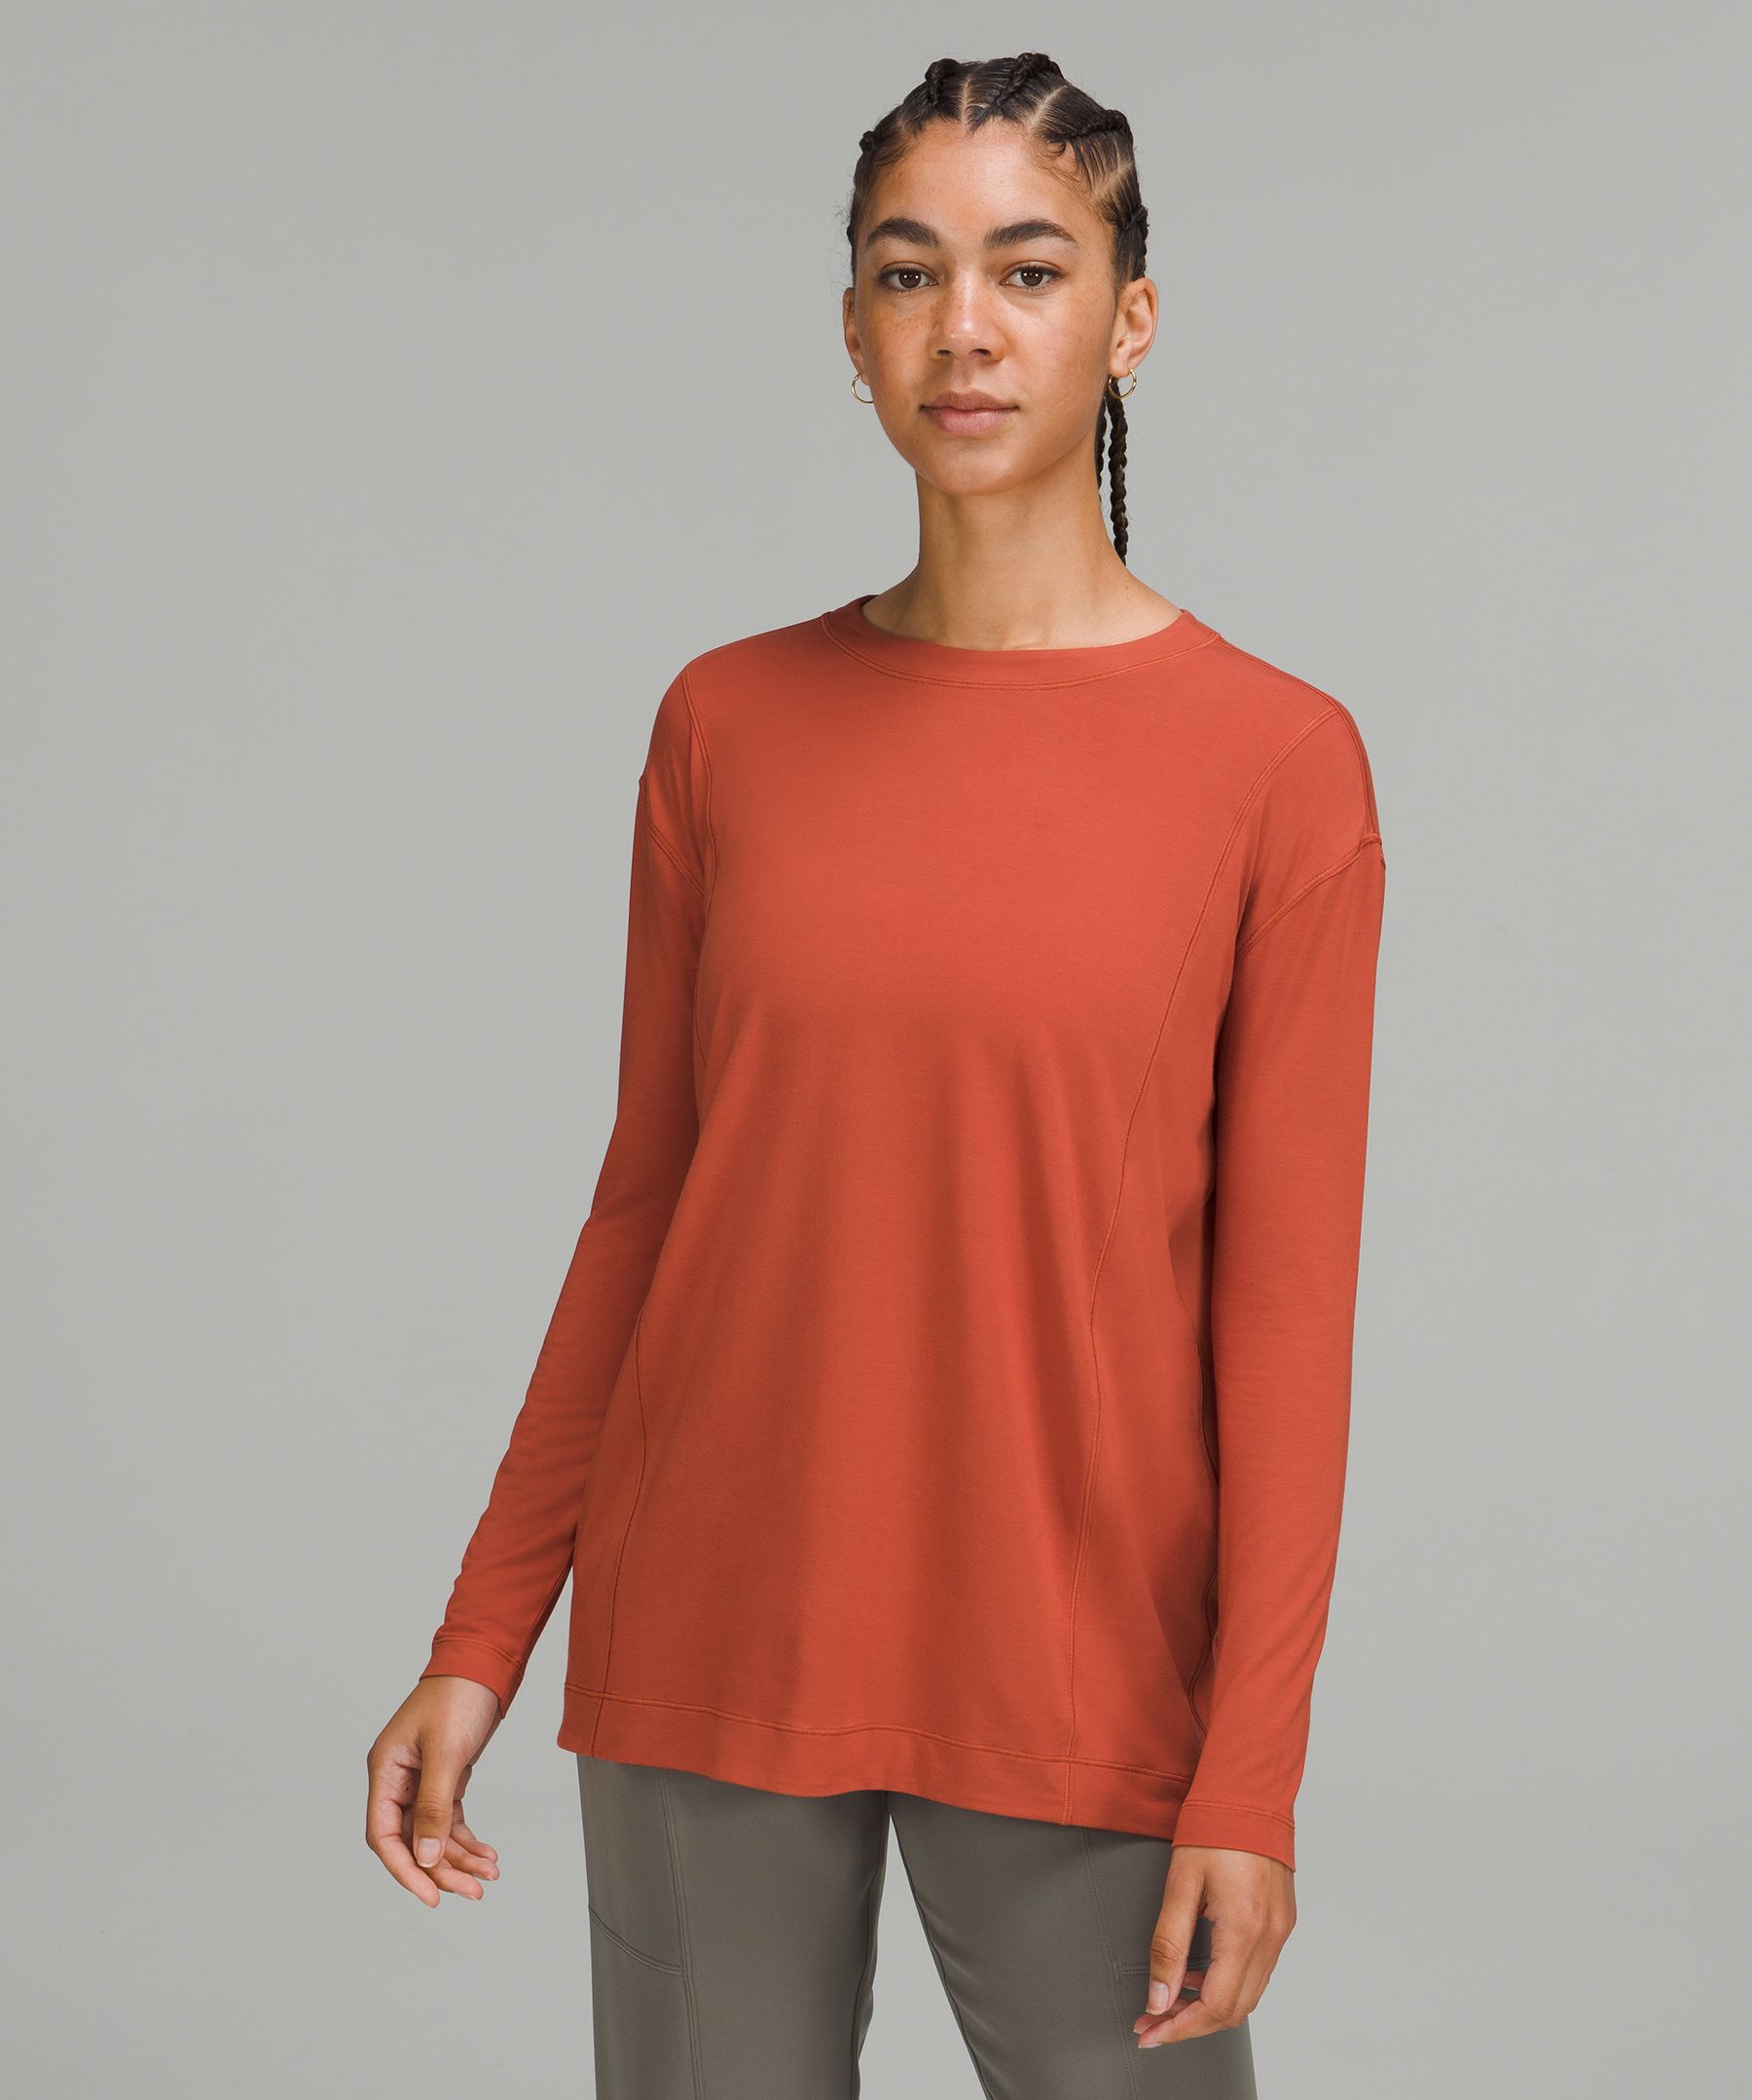 Lululemon Modal Pleated Back Long Sleeve Shirt In Red Rock